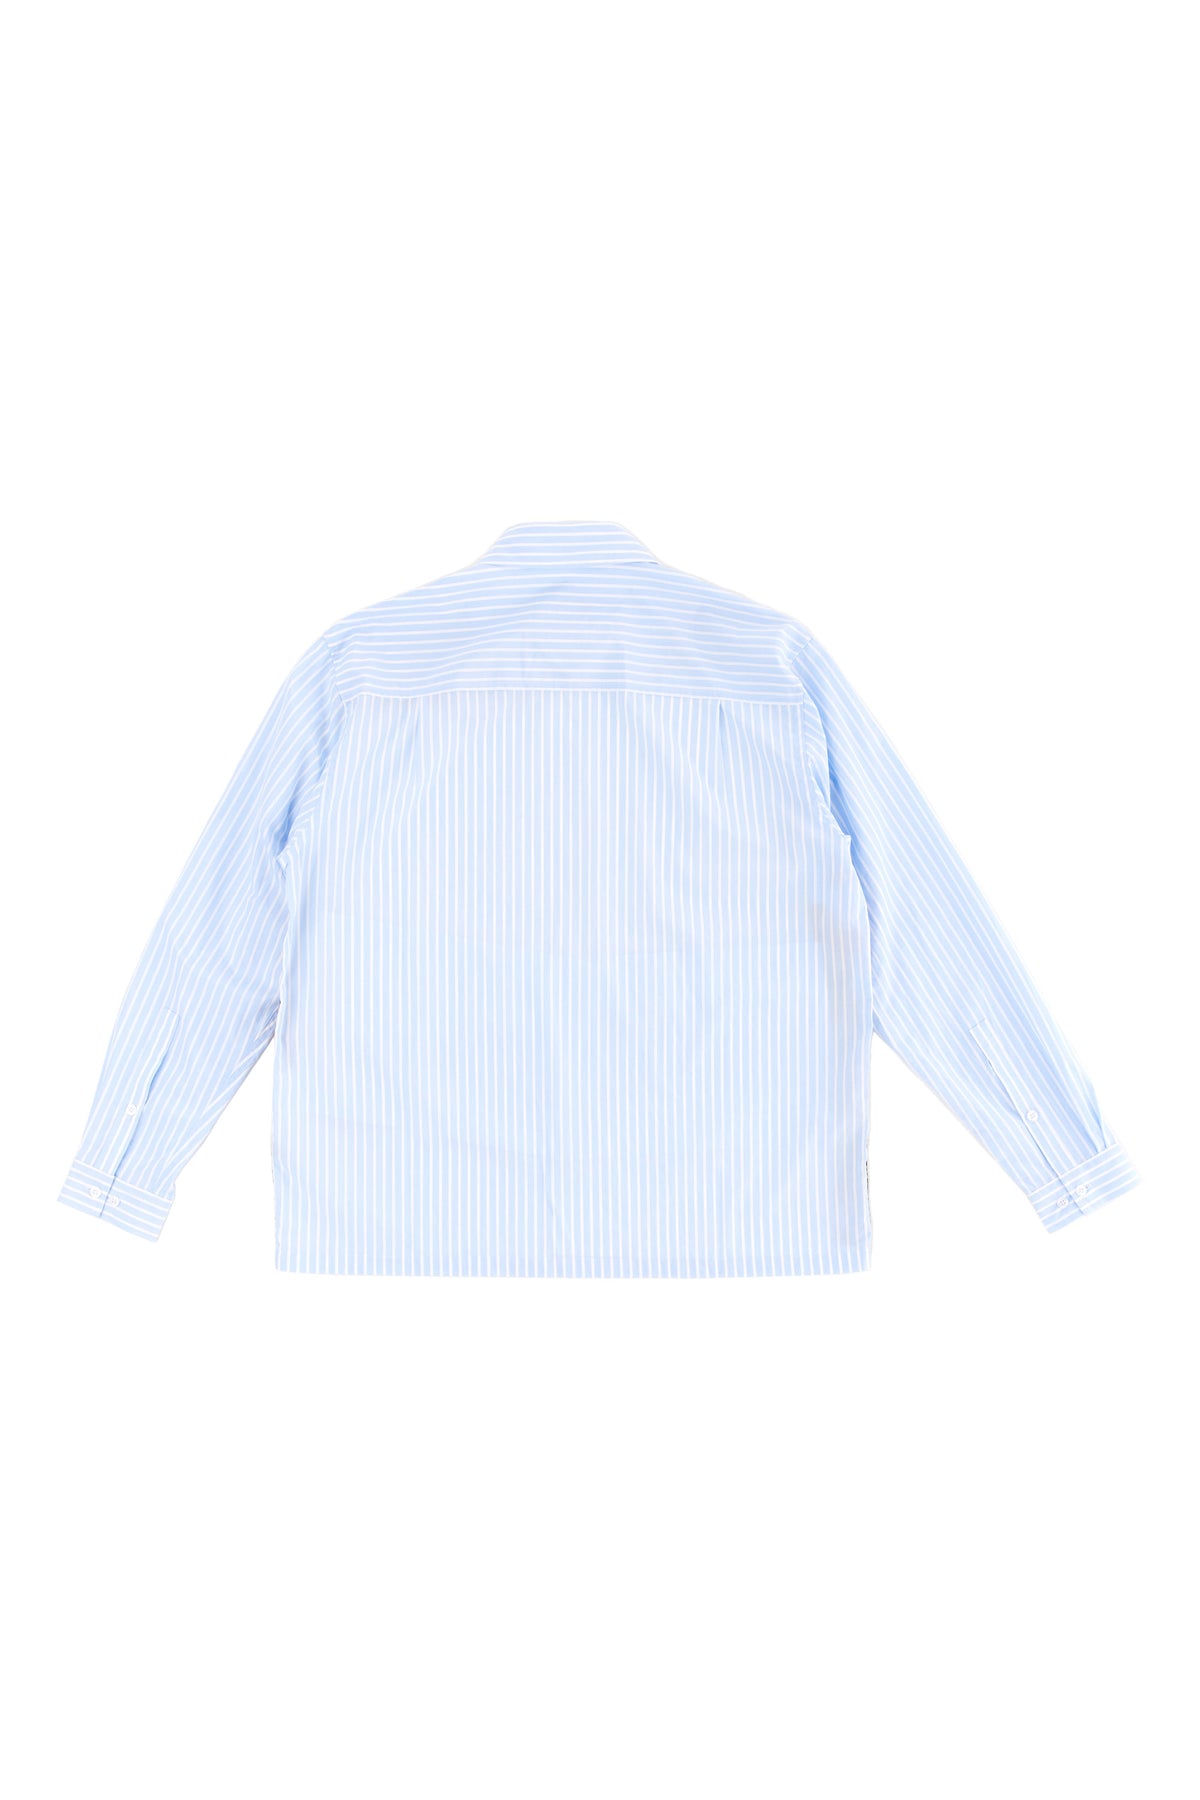 P.A.M. New Beginnings Stripe Shirt - Multi